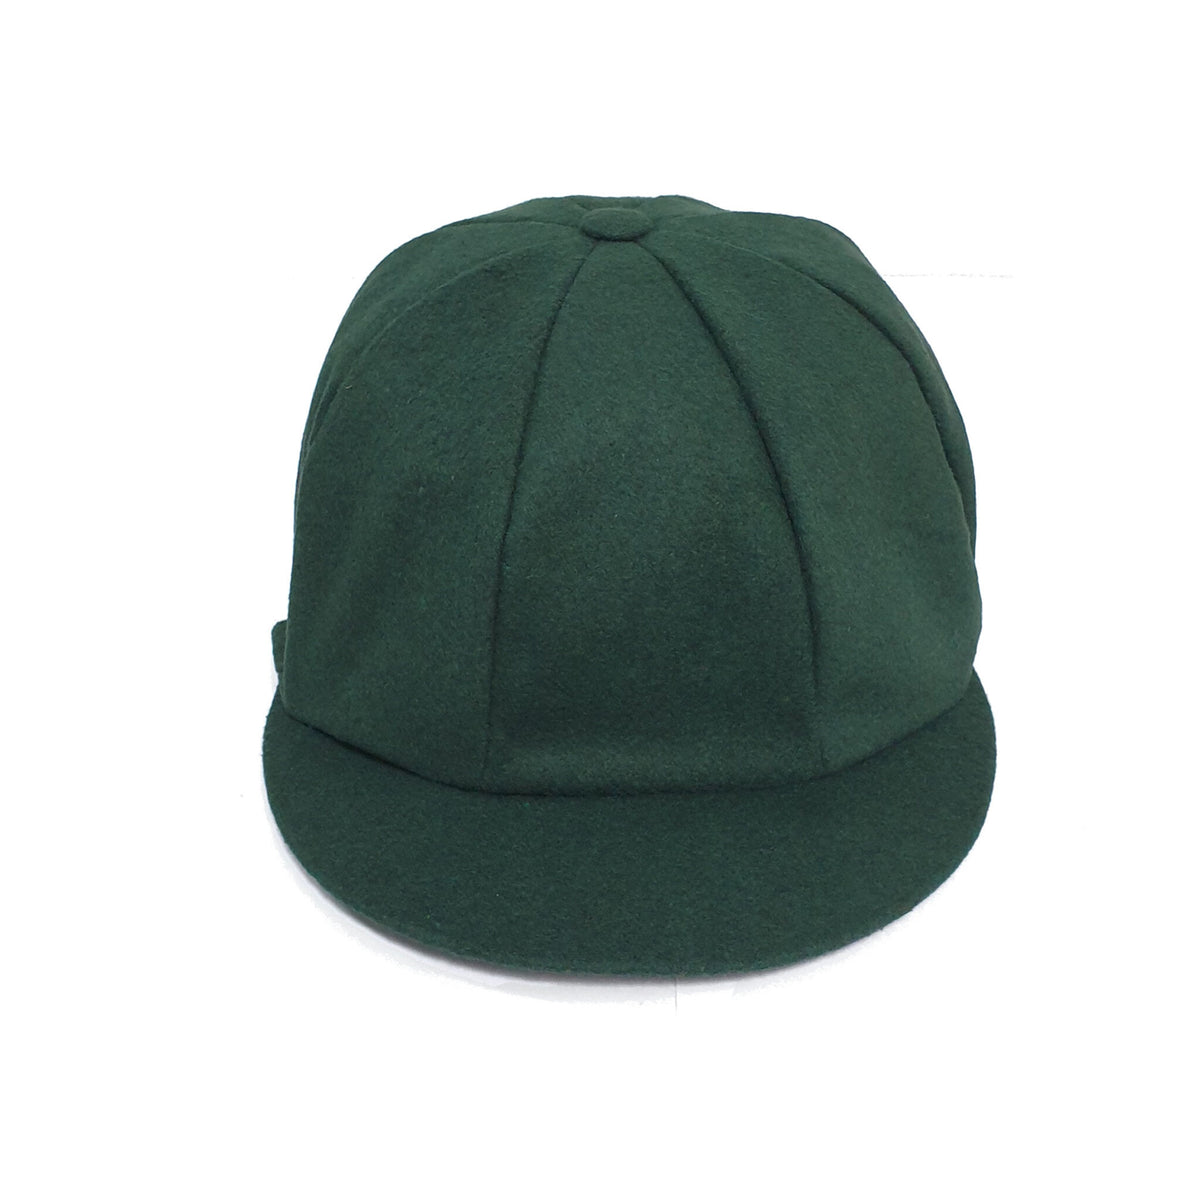 Australian Style Cricket Cap: Green